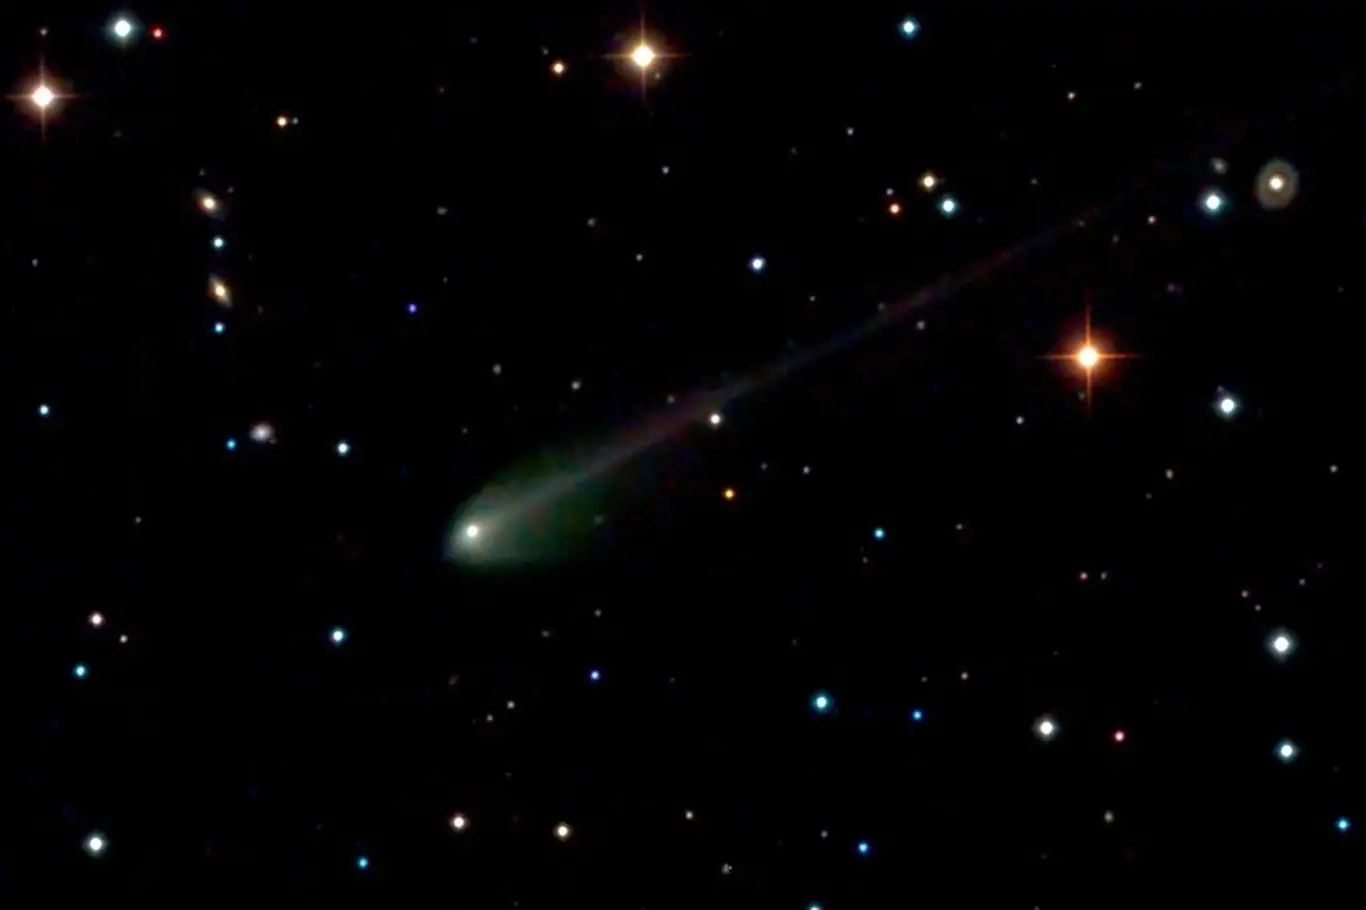 Kometa 67P/Čurjumov - Gerasimenko